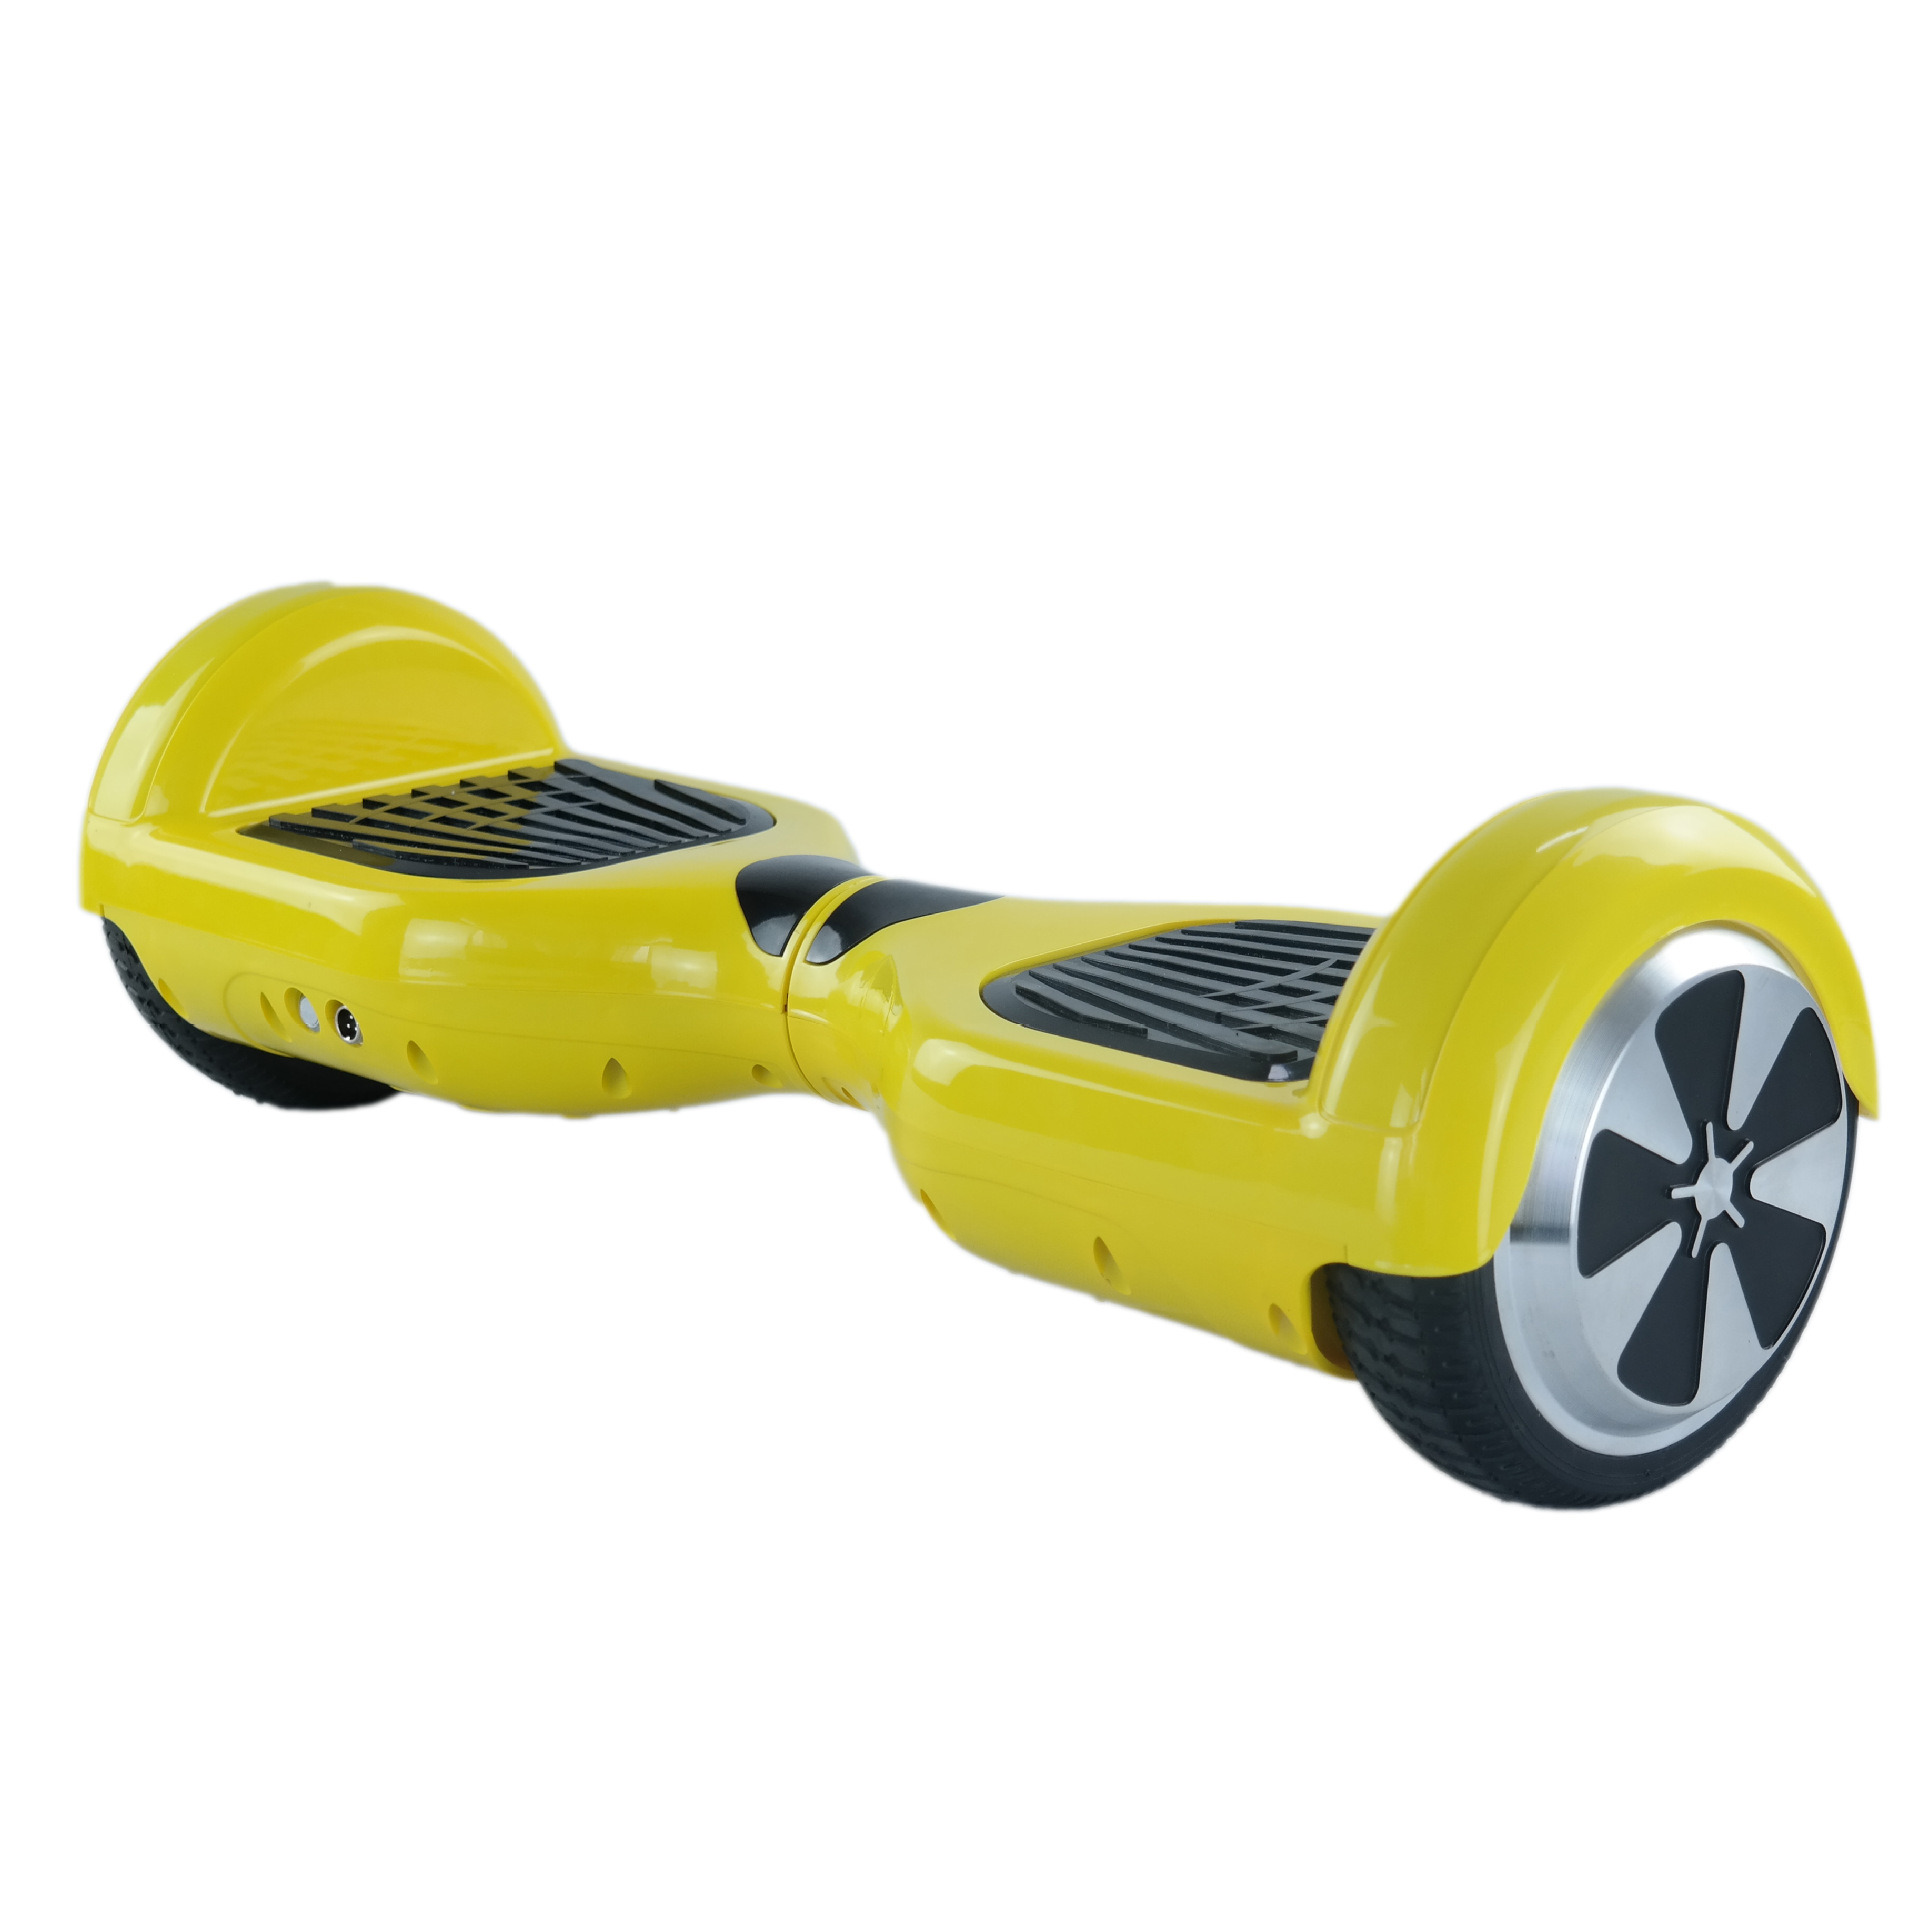 Электросамокат Smart Balance Wheel. Ручной скутер балансировочный. Скутер Smart 2. Ручной скутер